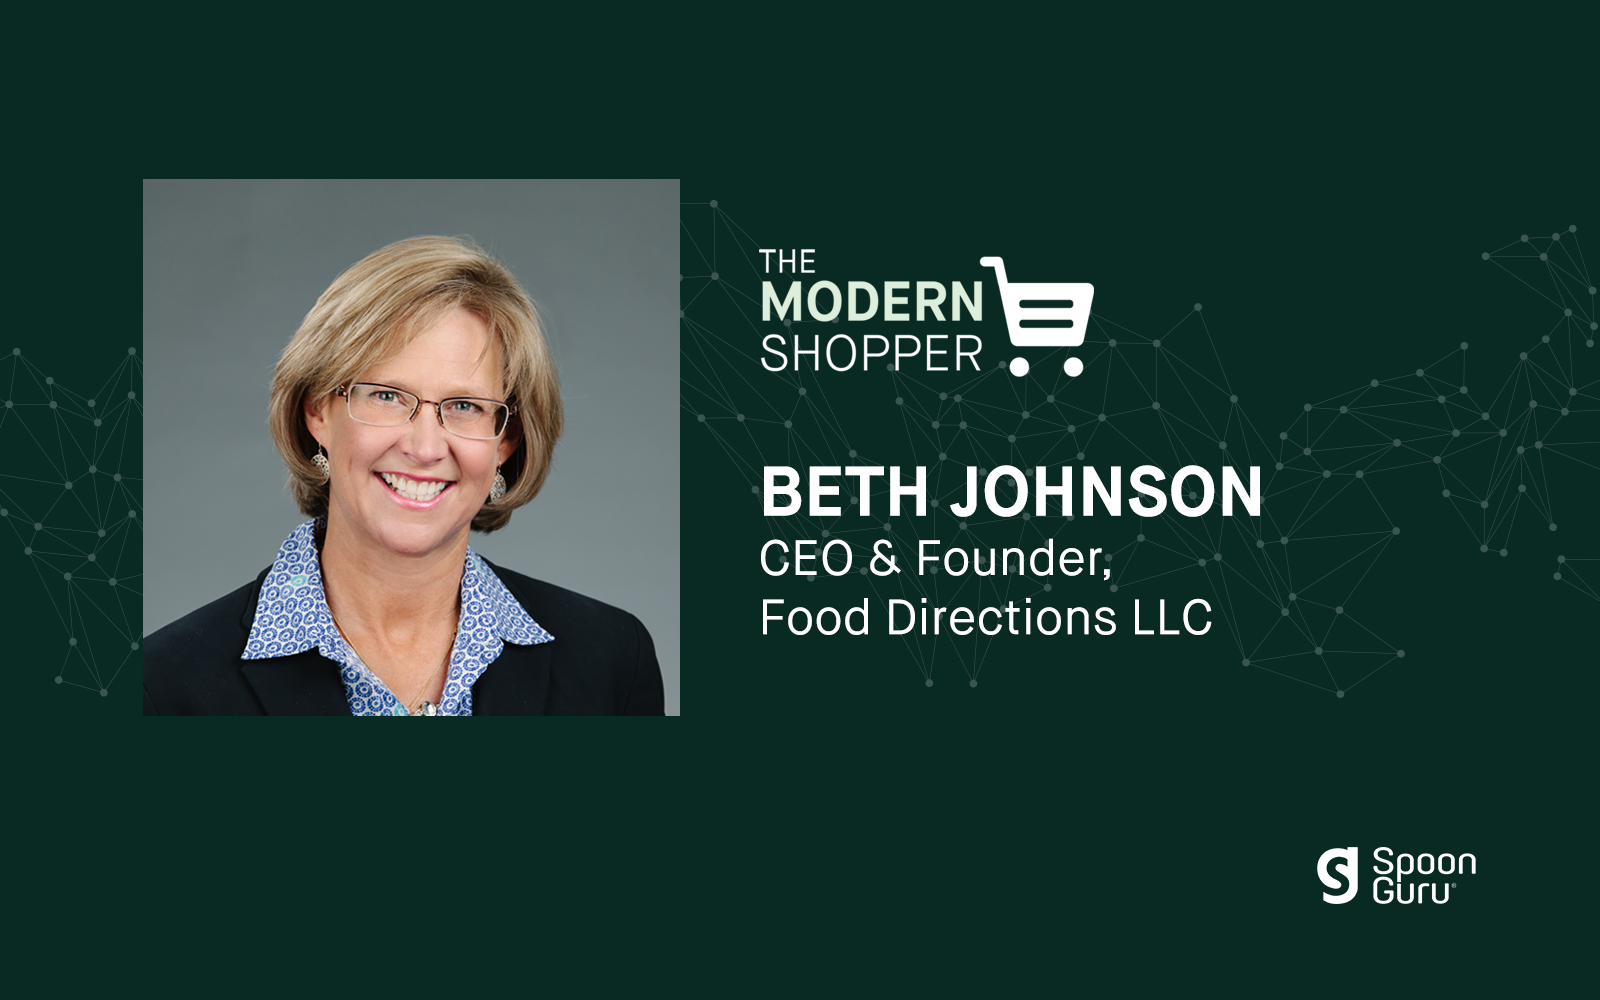 The Modern Shopper: Beth Johnson from Food Directions LLC